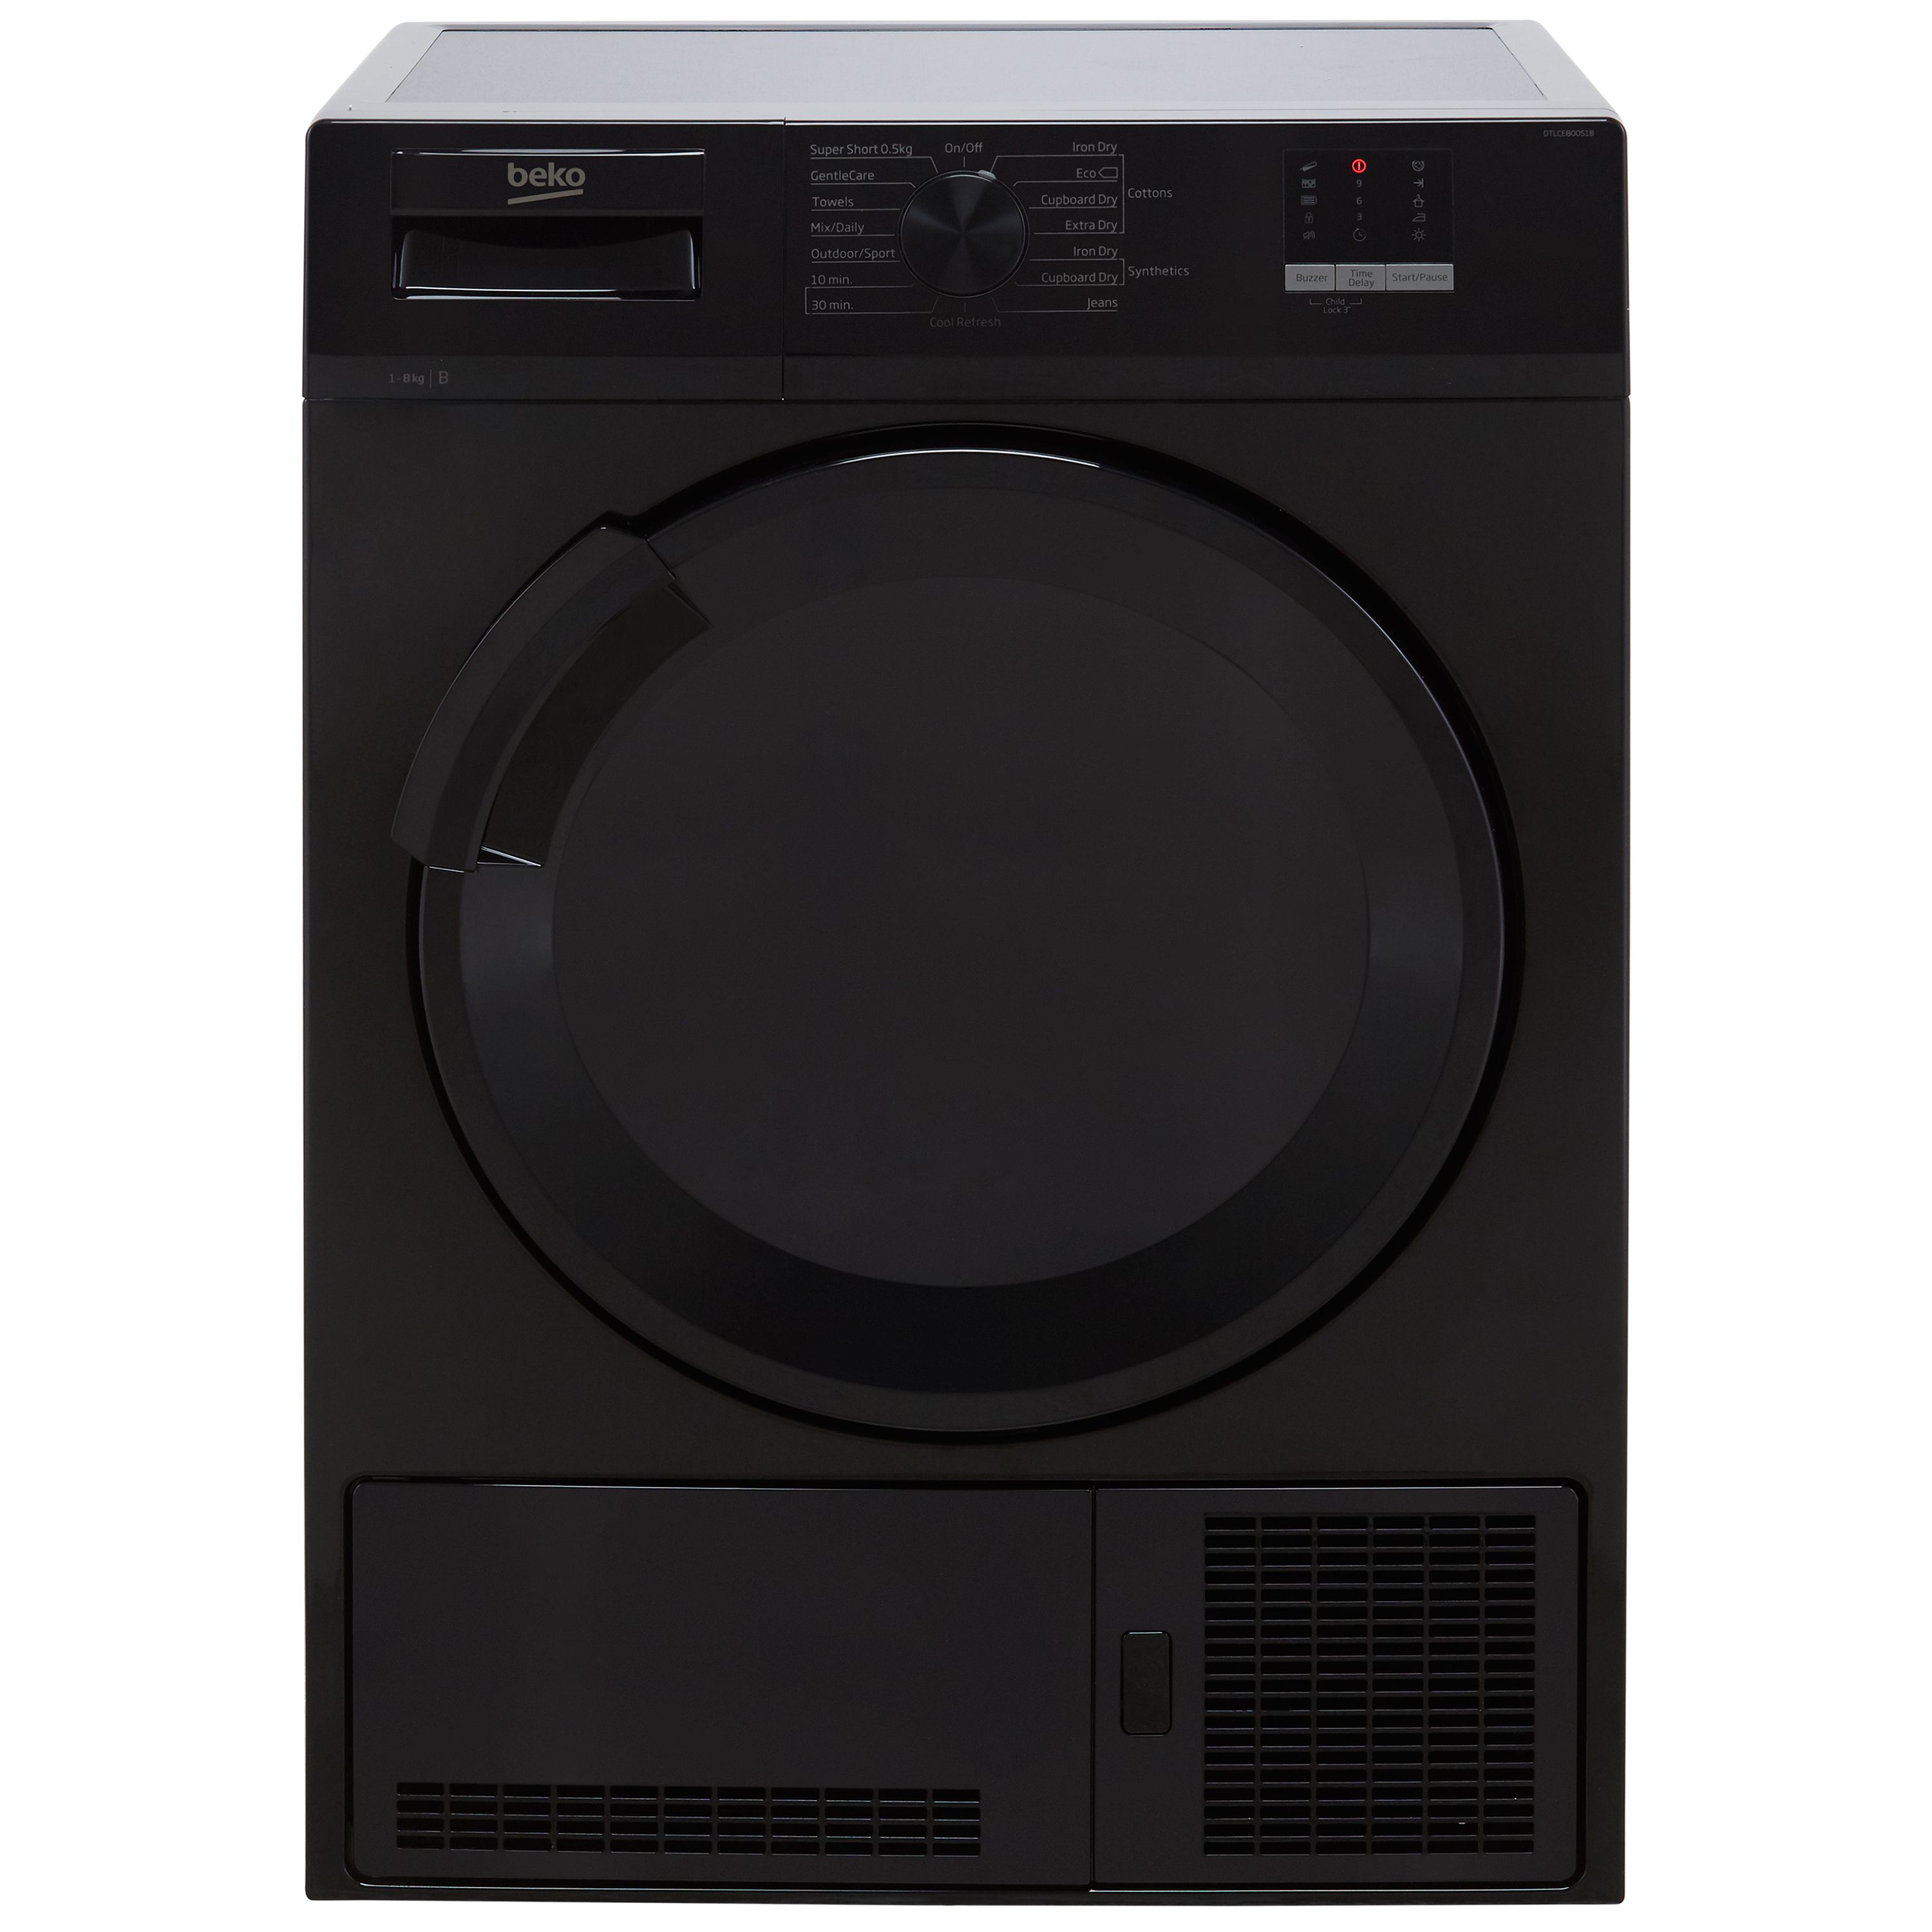 Beko DTLCE80051B 8Kg Condenser Tumble Dryer - Black - B Rated, Black